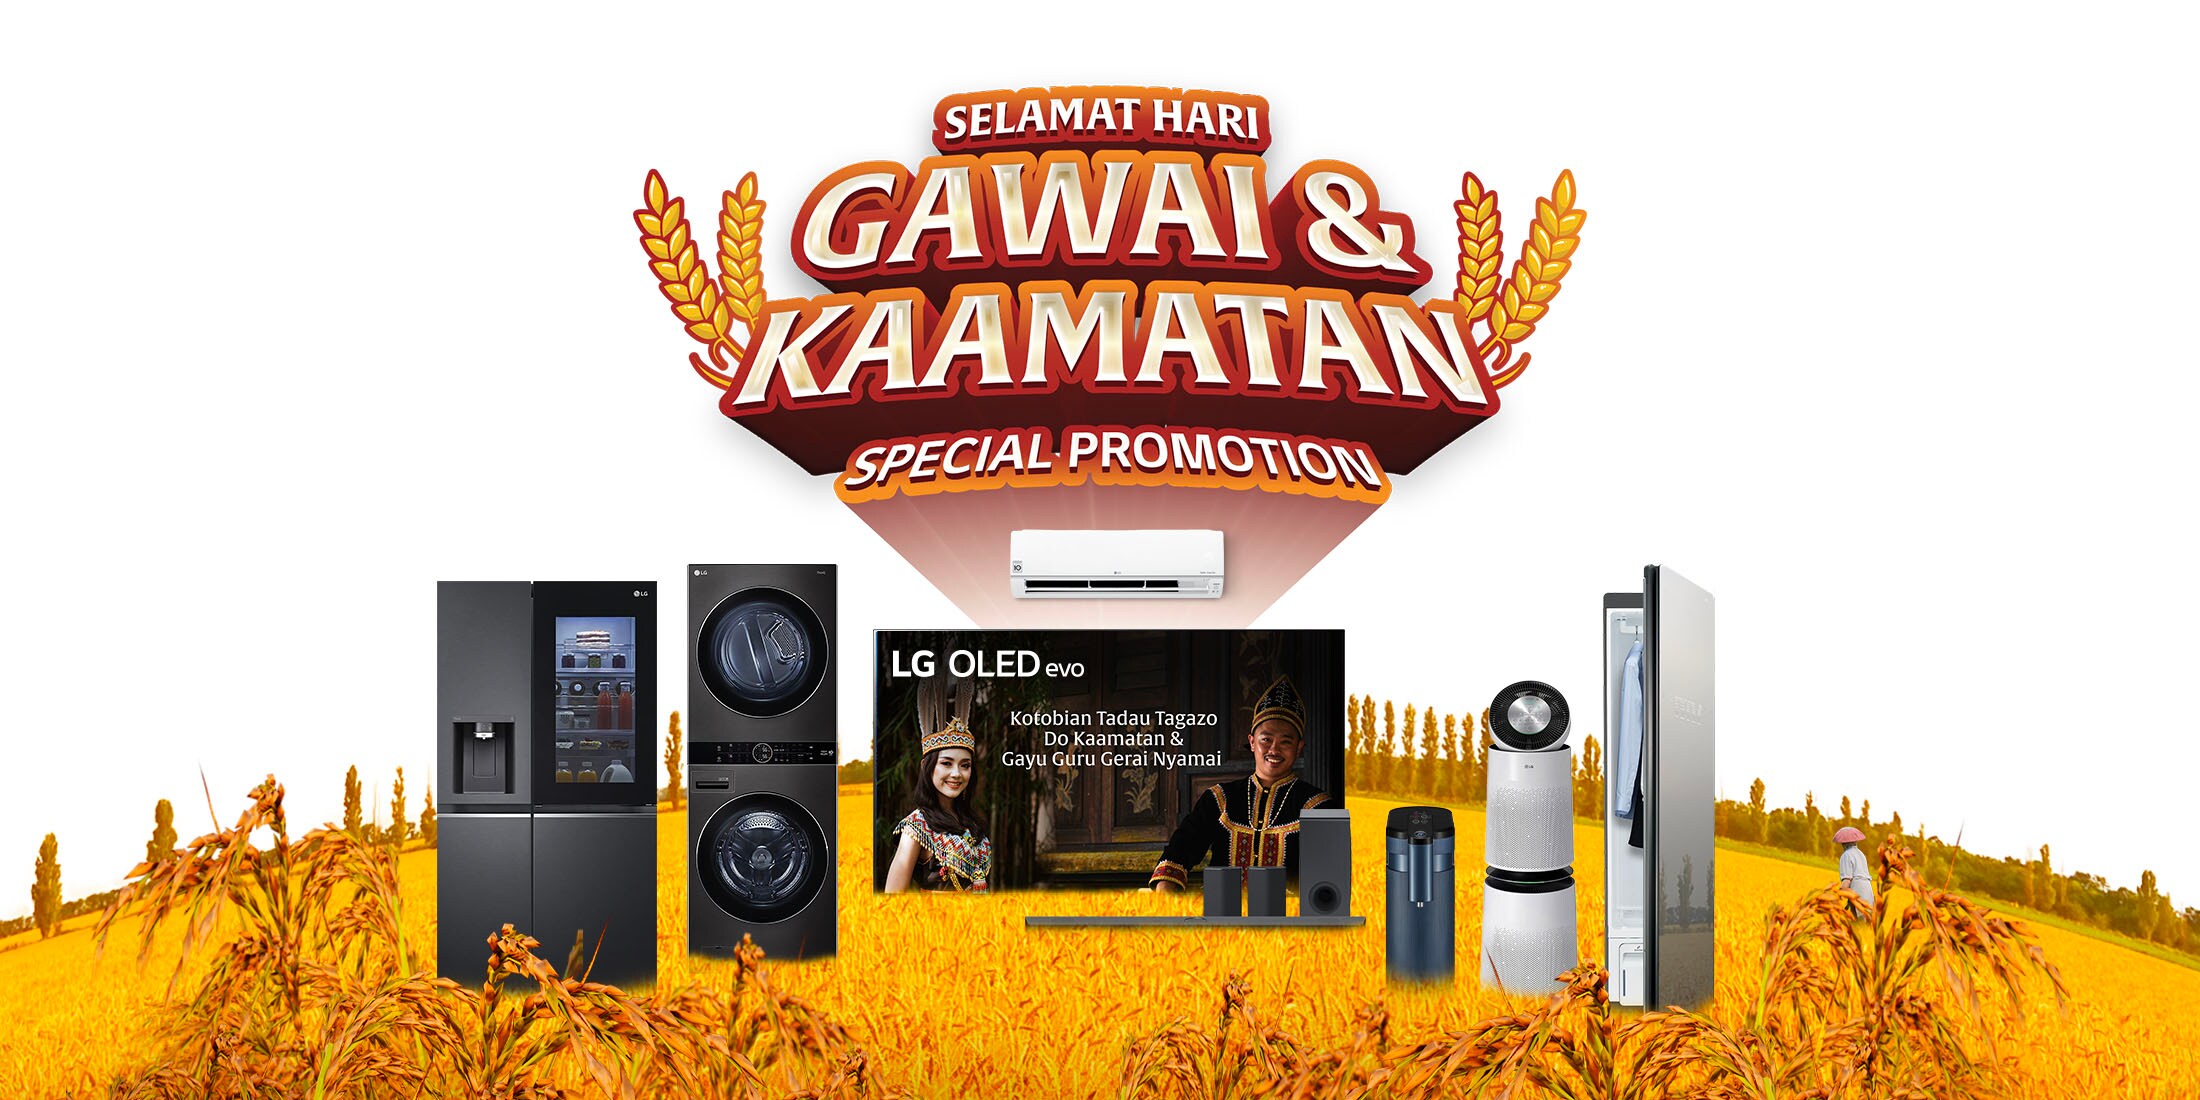 LG Gawai & Kaamatan Special Promotion